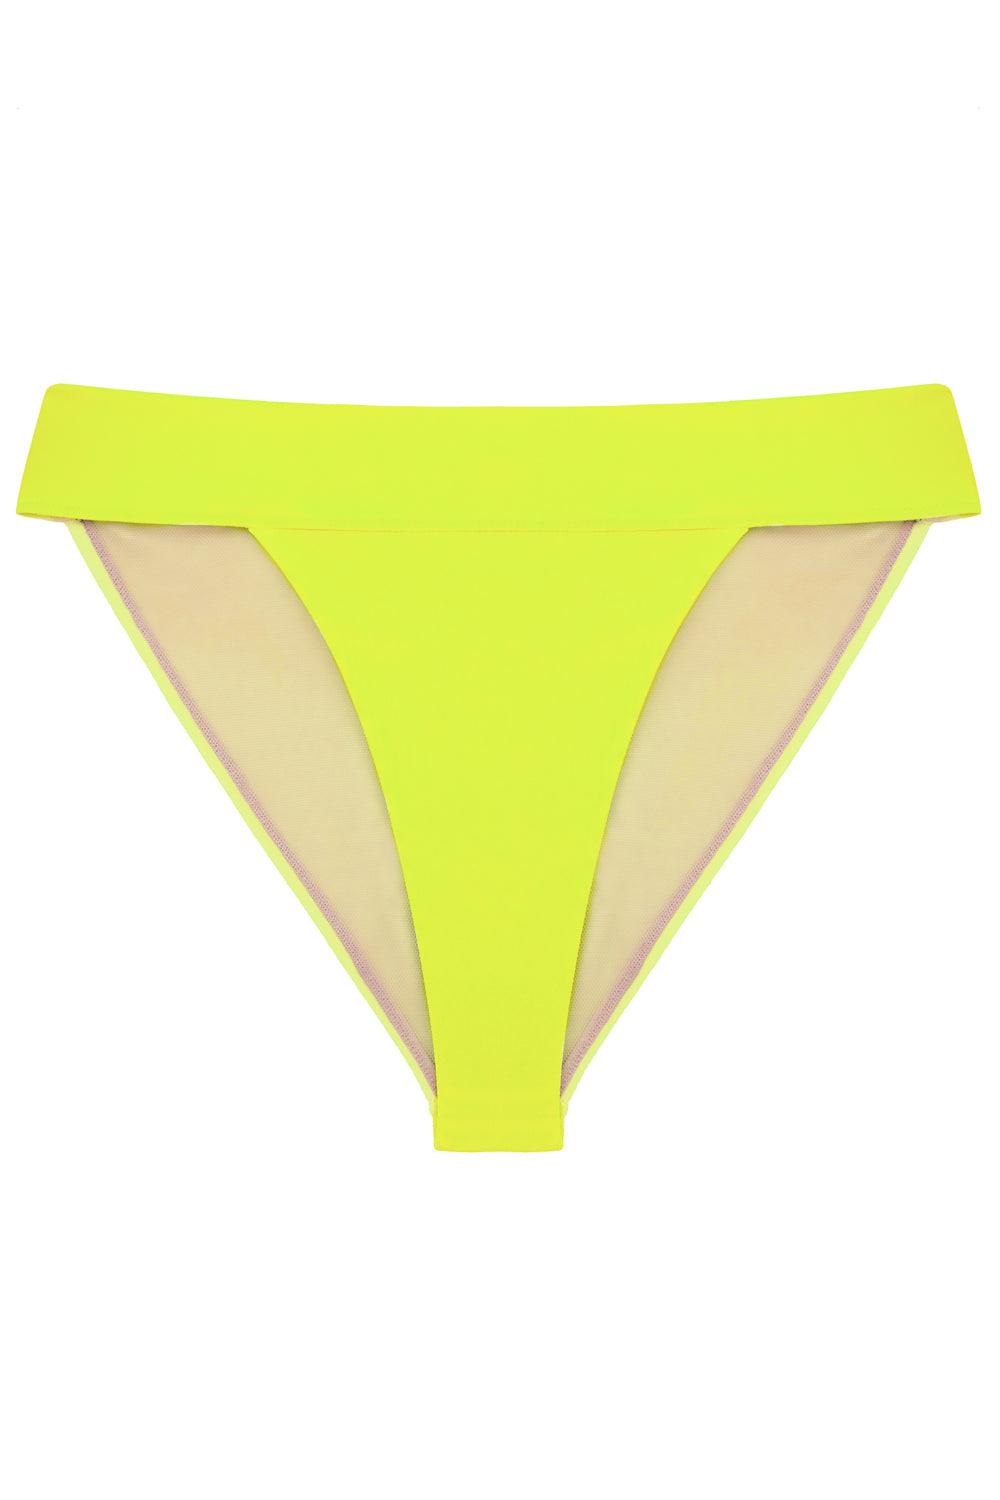 Tonic Yellow high waisted bikini bottom - yesUndress